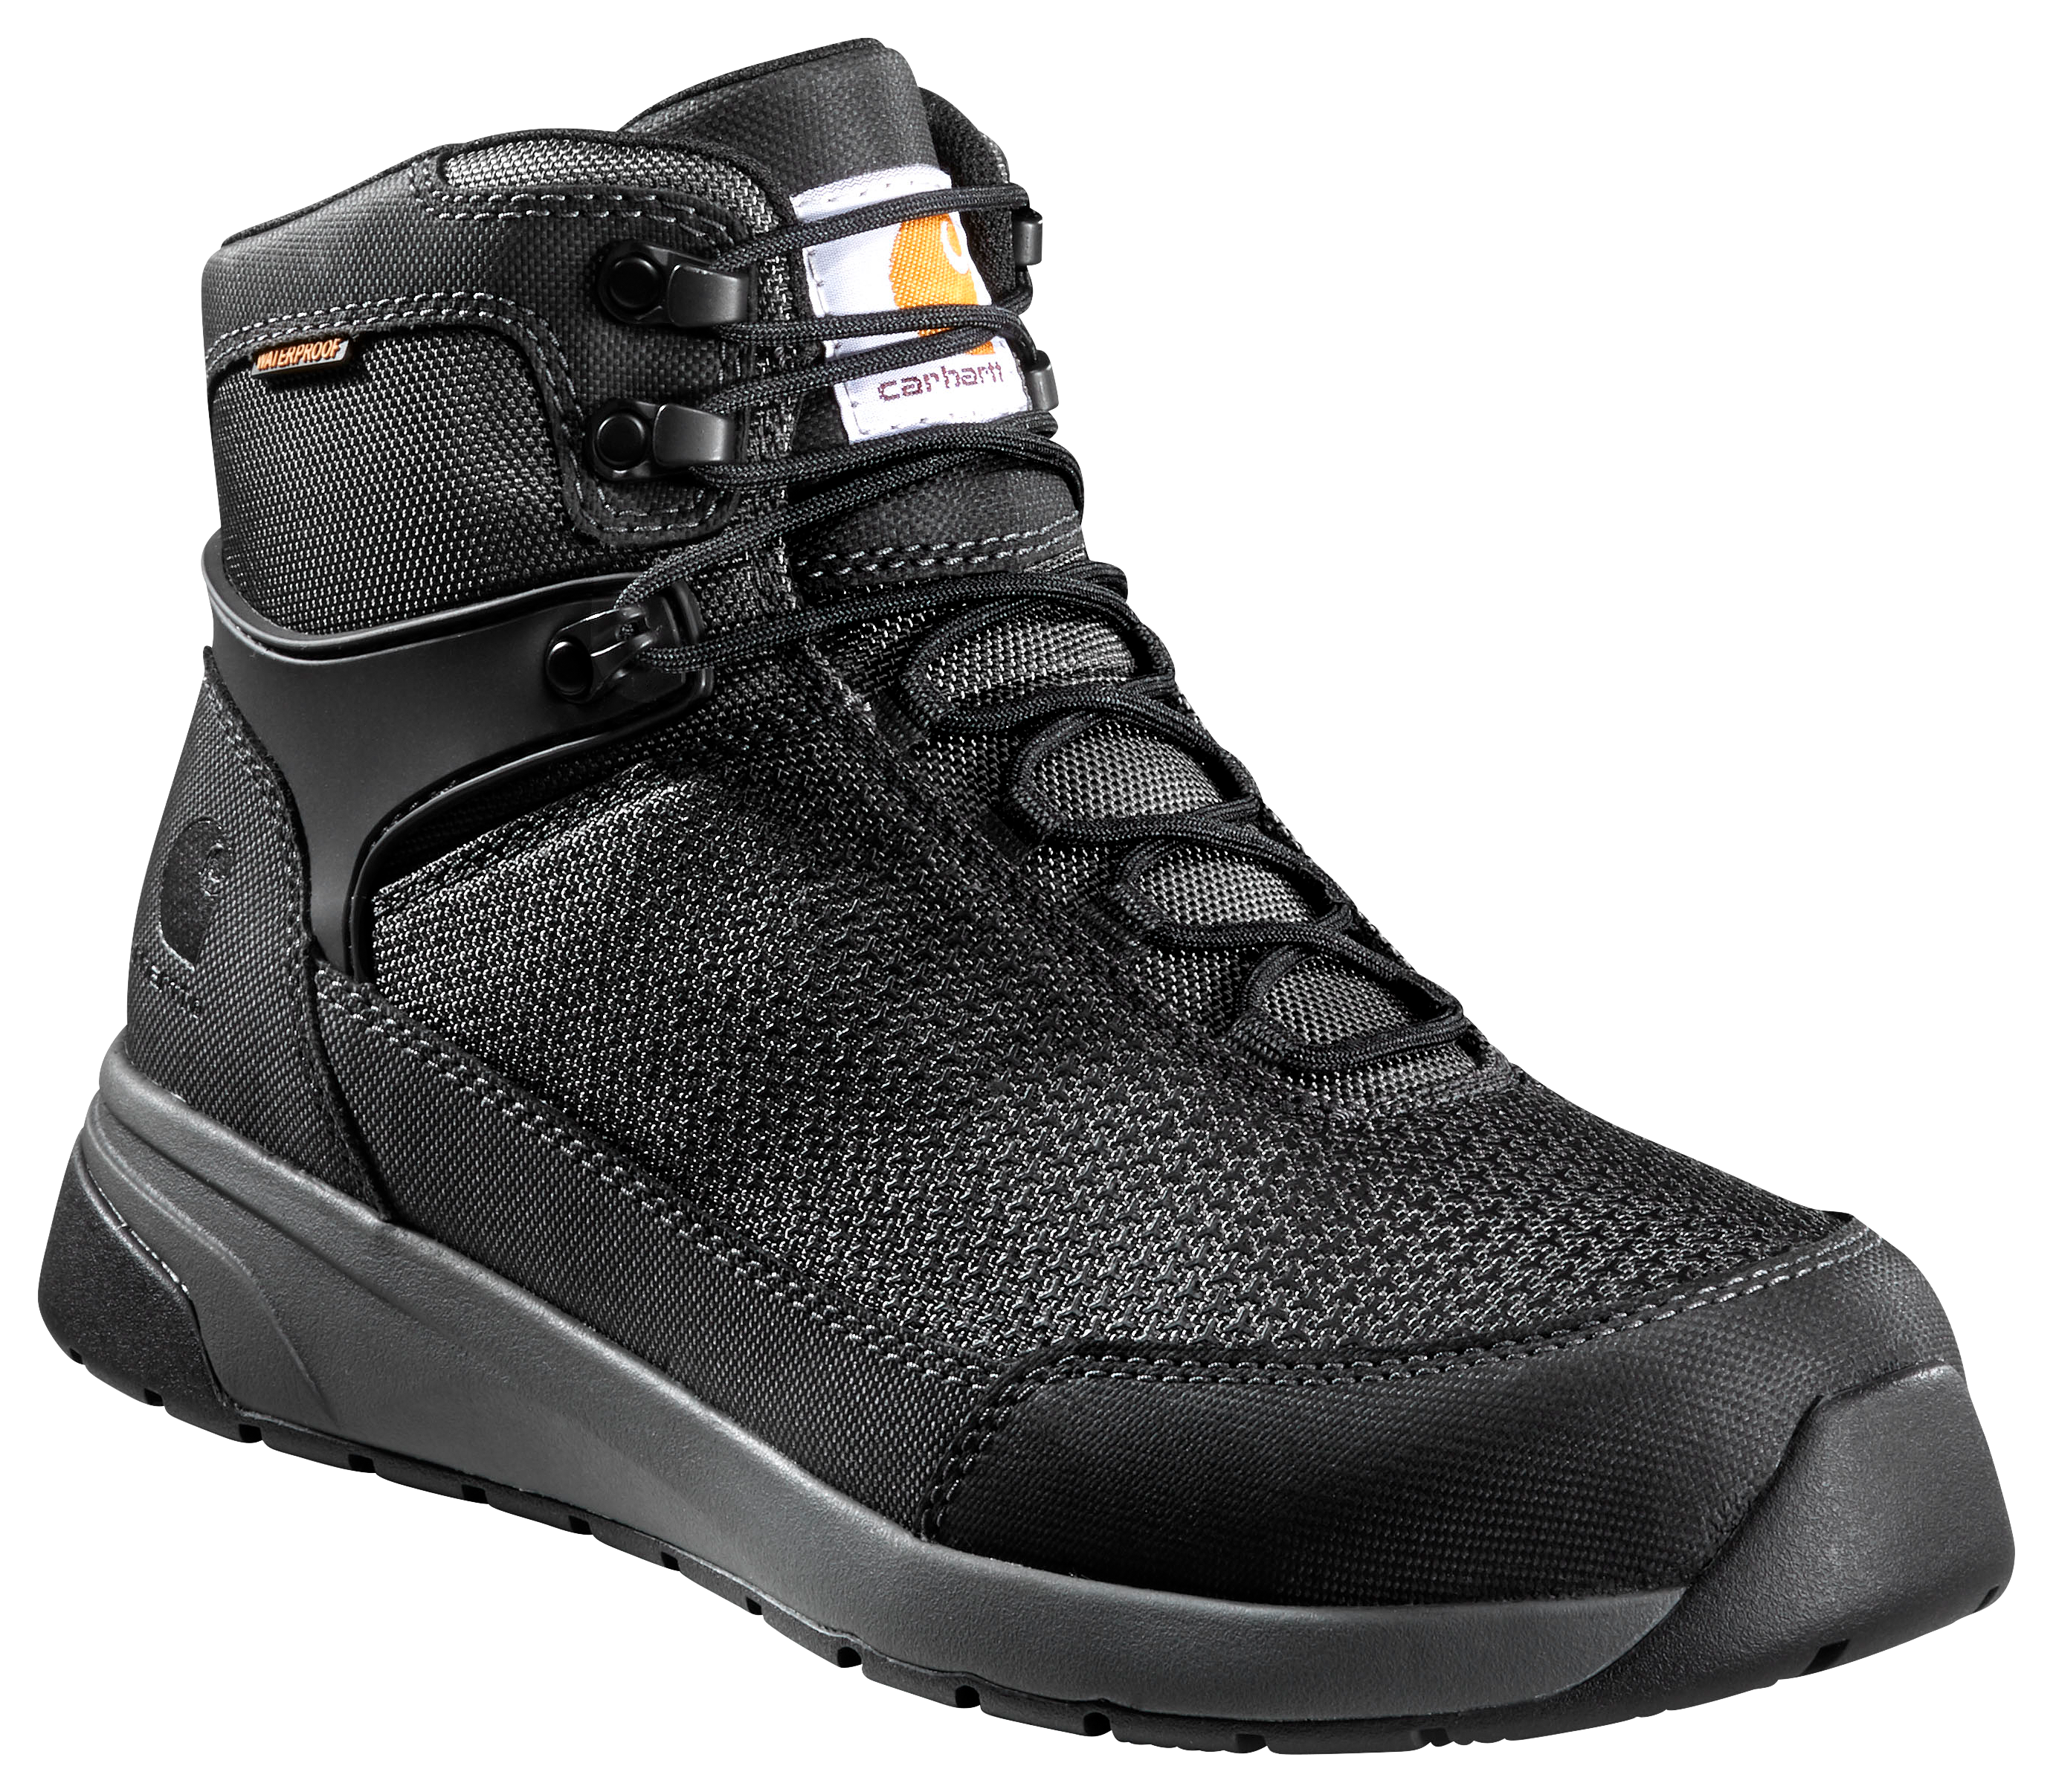 Carhartt Force 6"" Nano Composite-Toe Work Boots for Men - Black - 9.5M